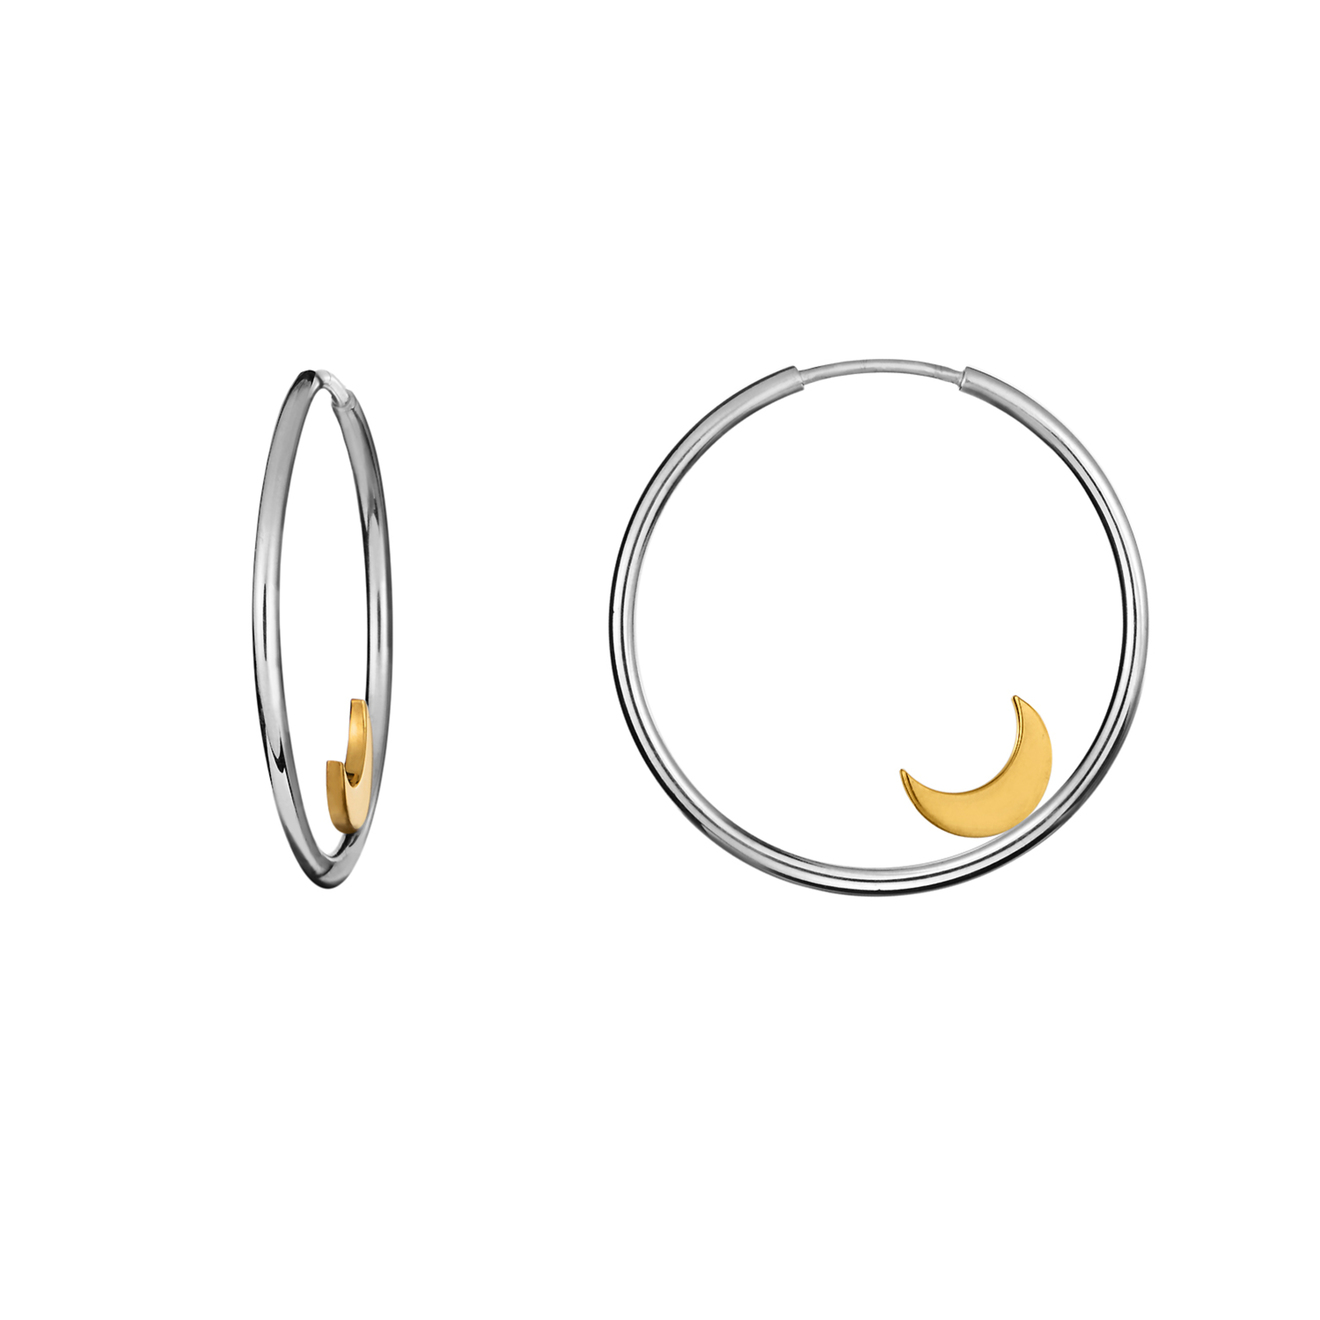 LUSIN Jewelry Серьги-кольца из серебра с золотистым полумесяцем Moon Hoops martha calvo серьги ribbon hoops